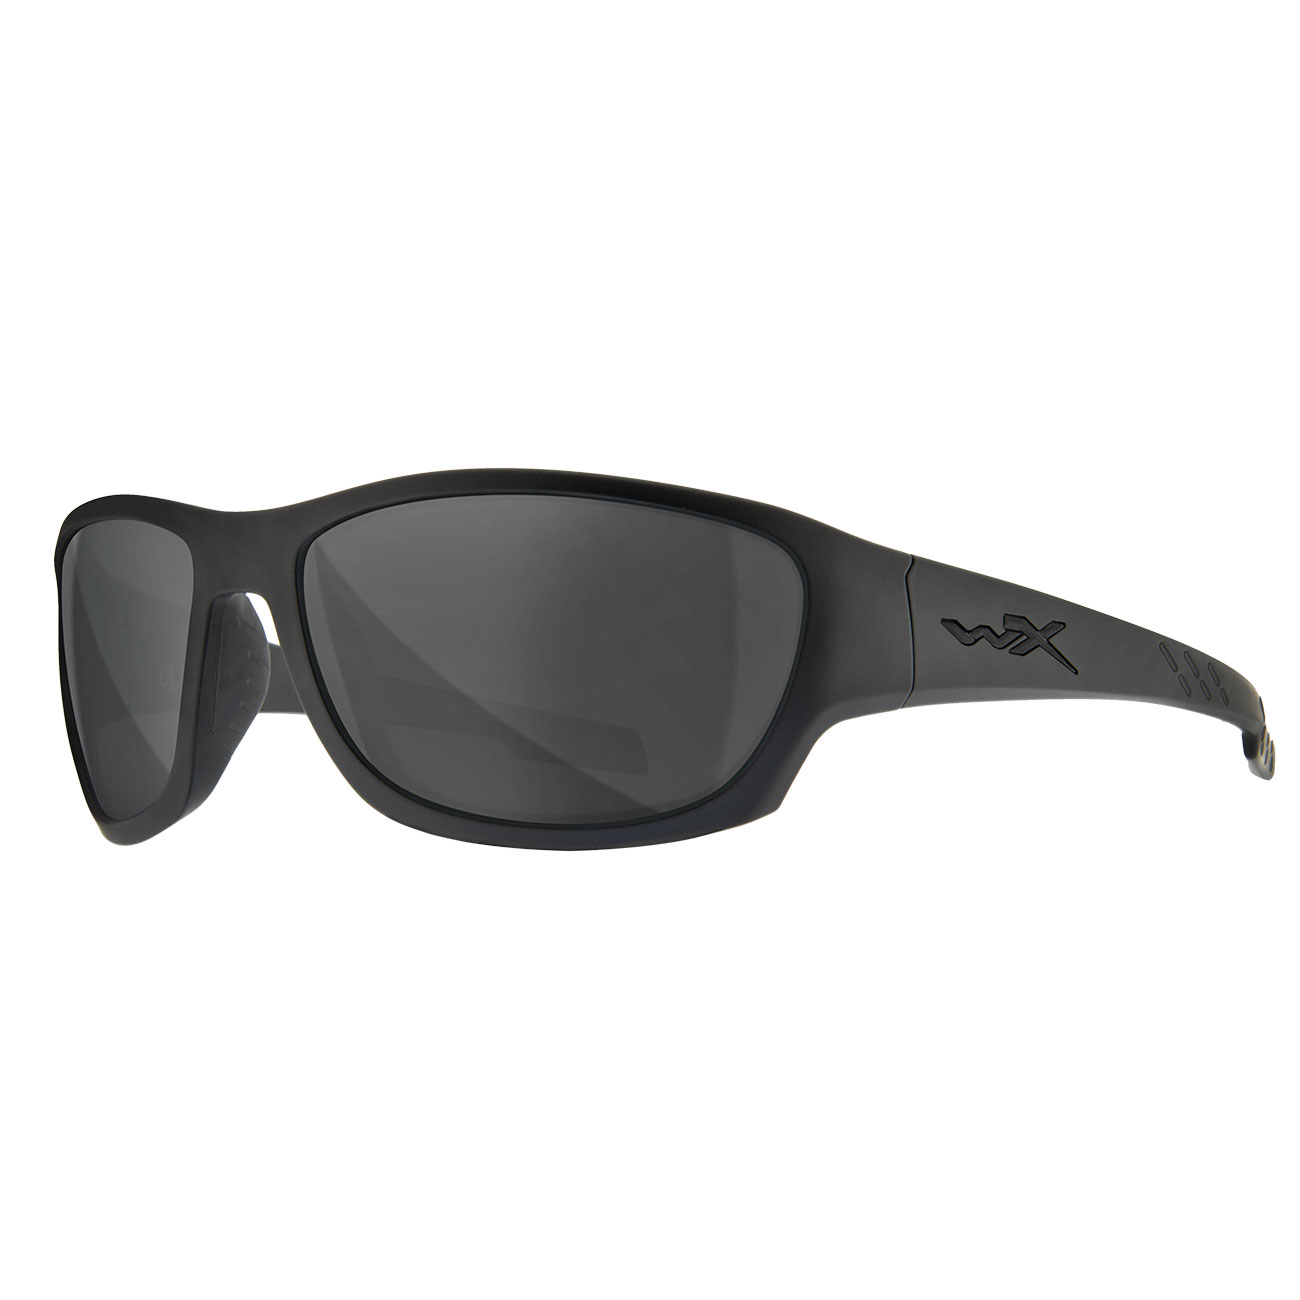 Wiley X Sonnenbrille Climb matt schwarz Glser grau inkl. Brillenetui